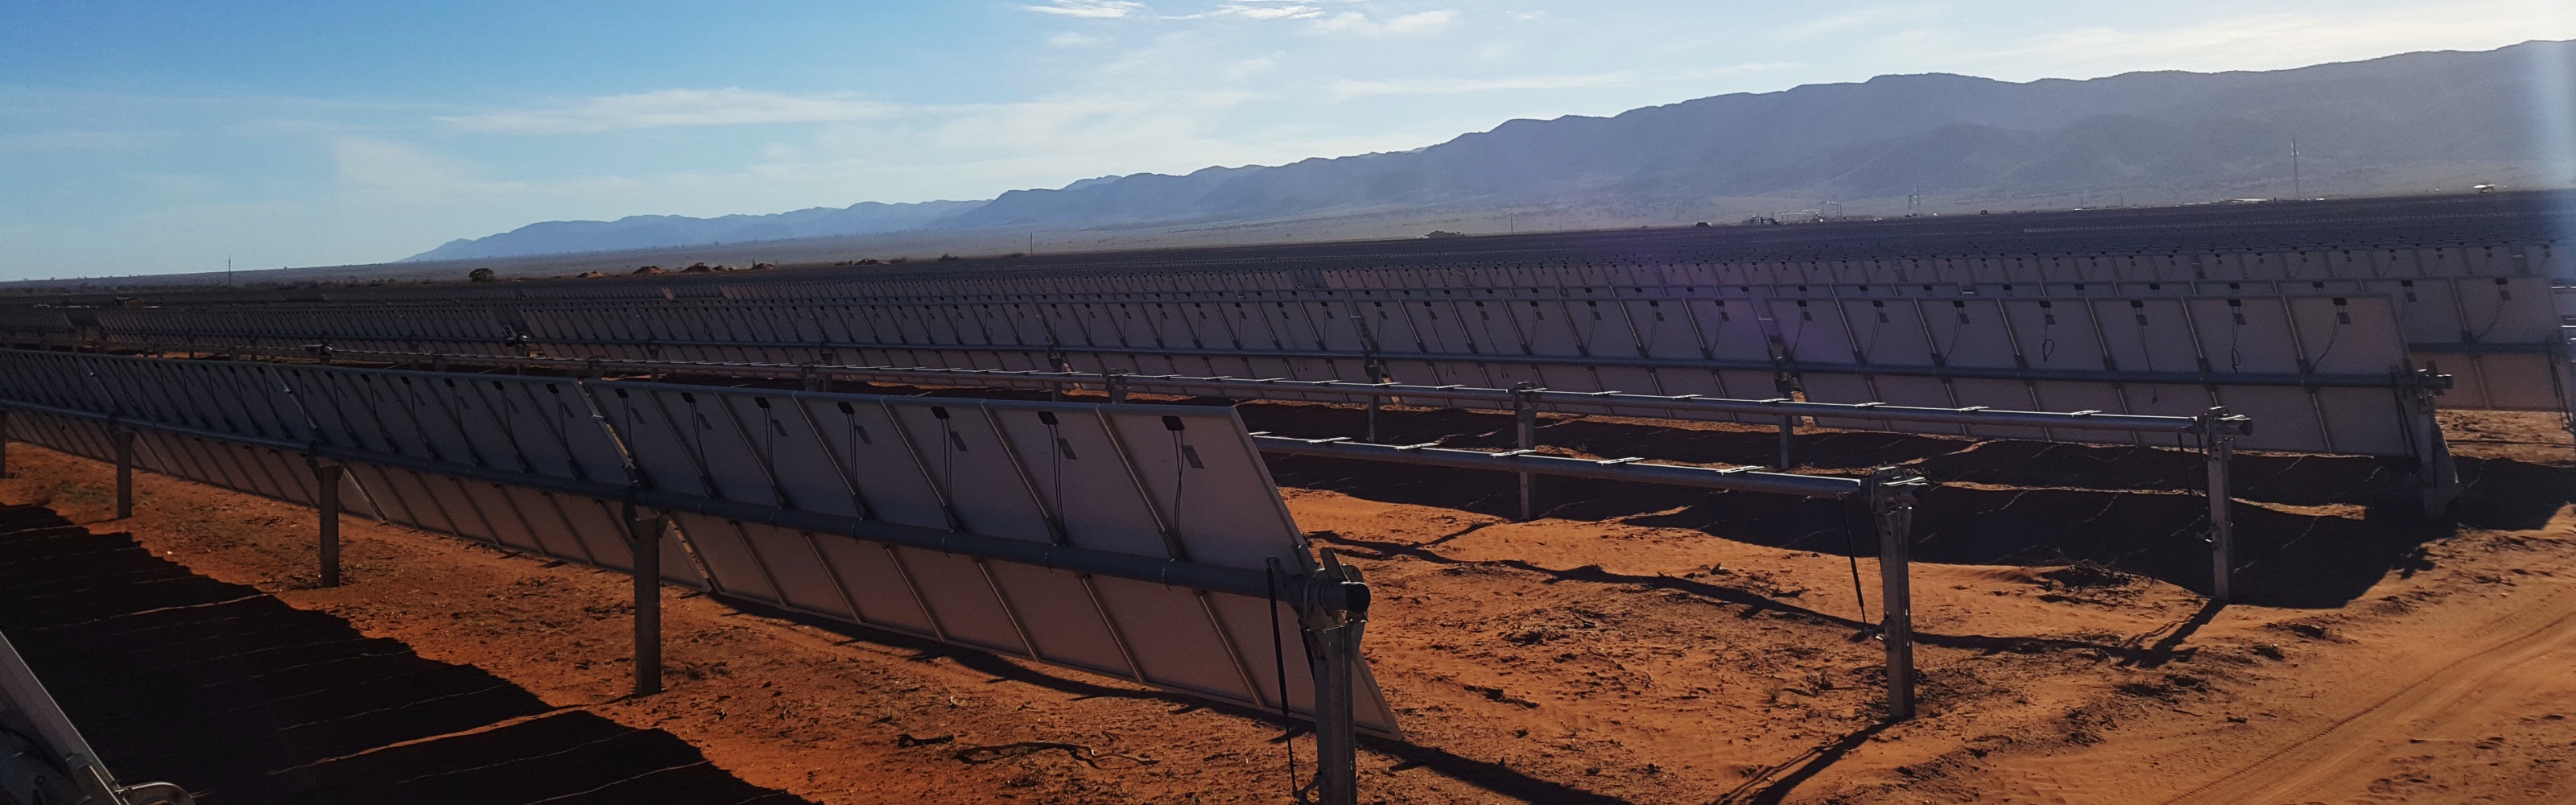 DRASOL solar farm projects